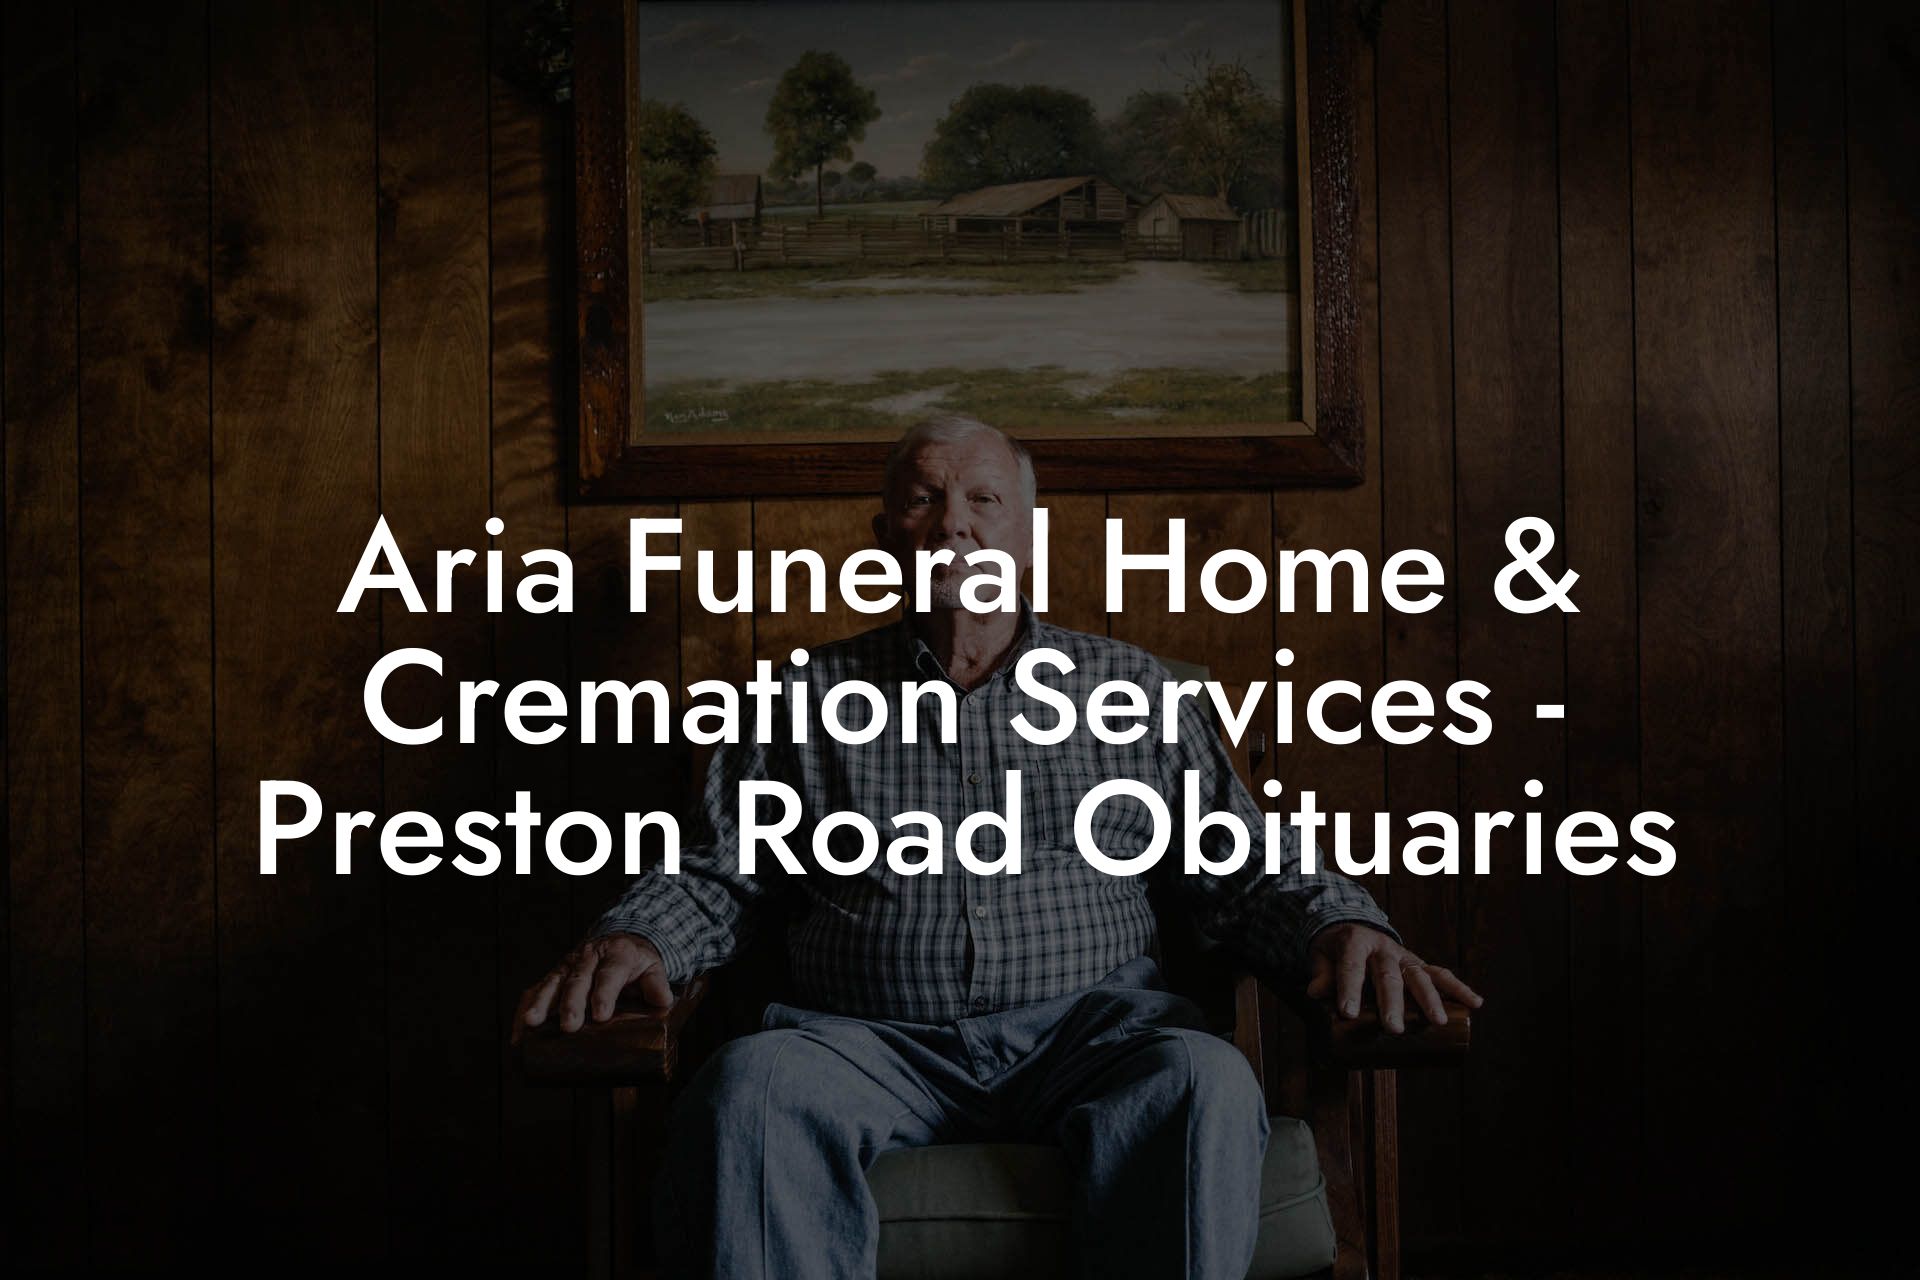 Aria Funeral Home & Cremation Services - Preston Road Obituaries